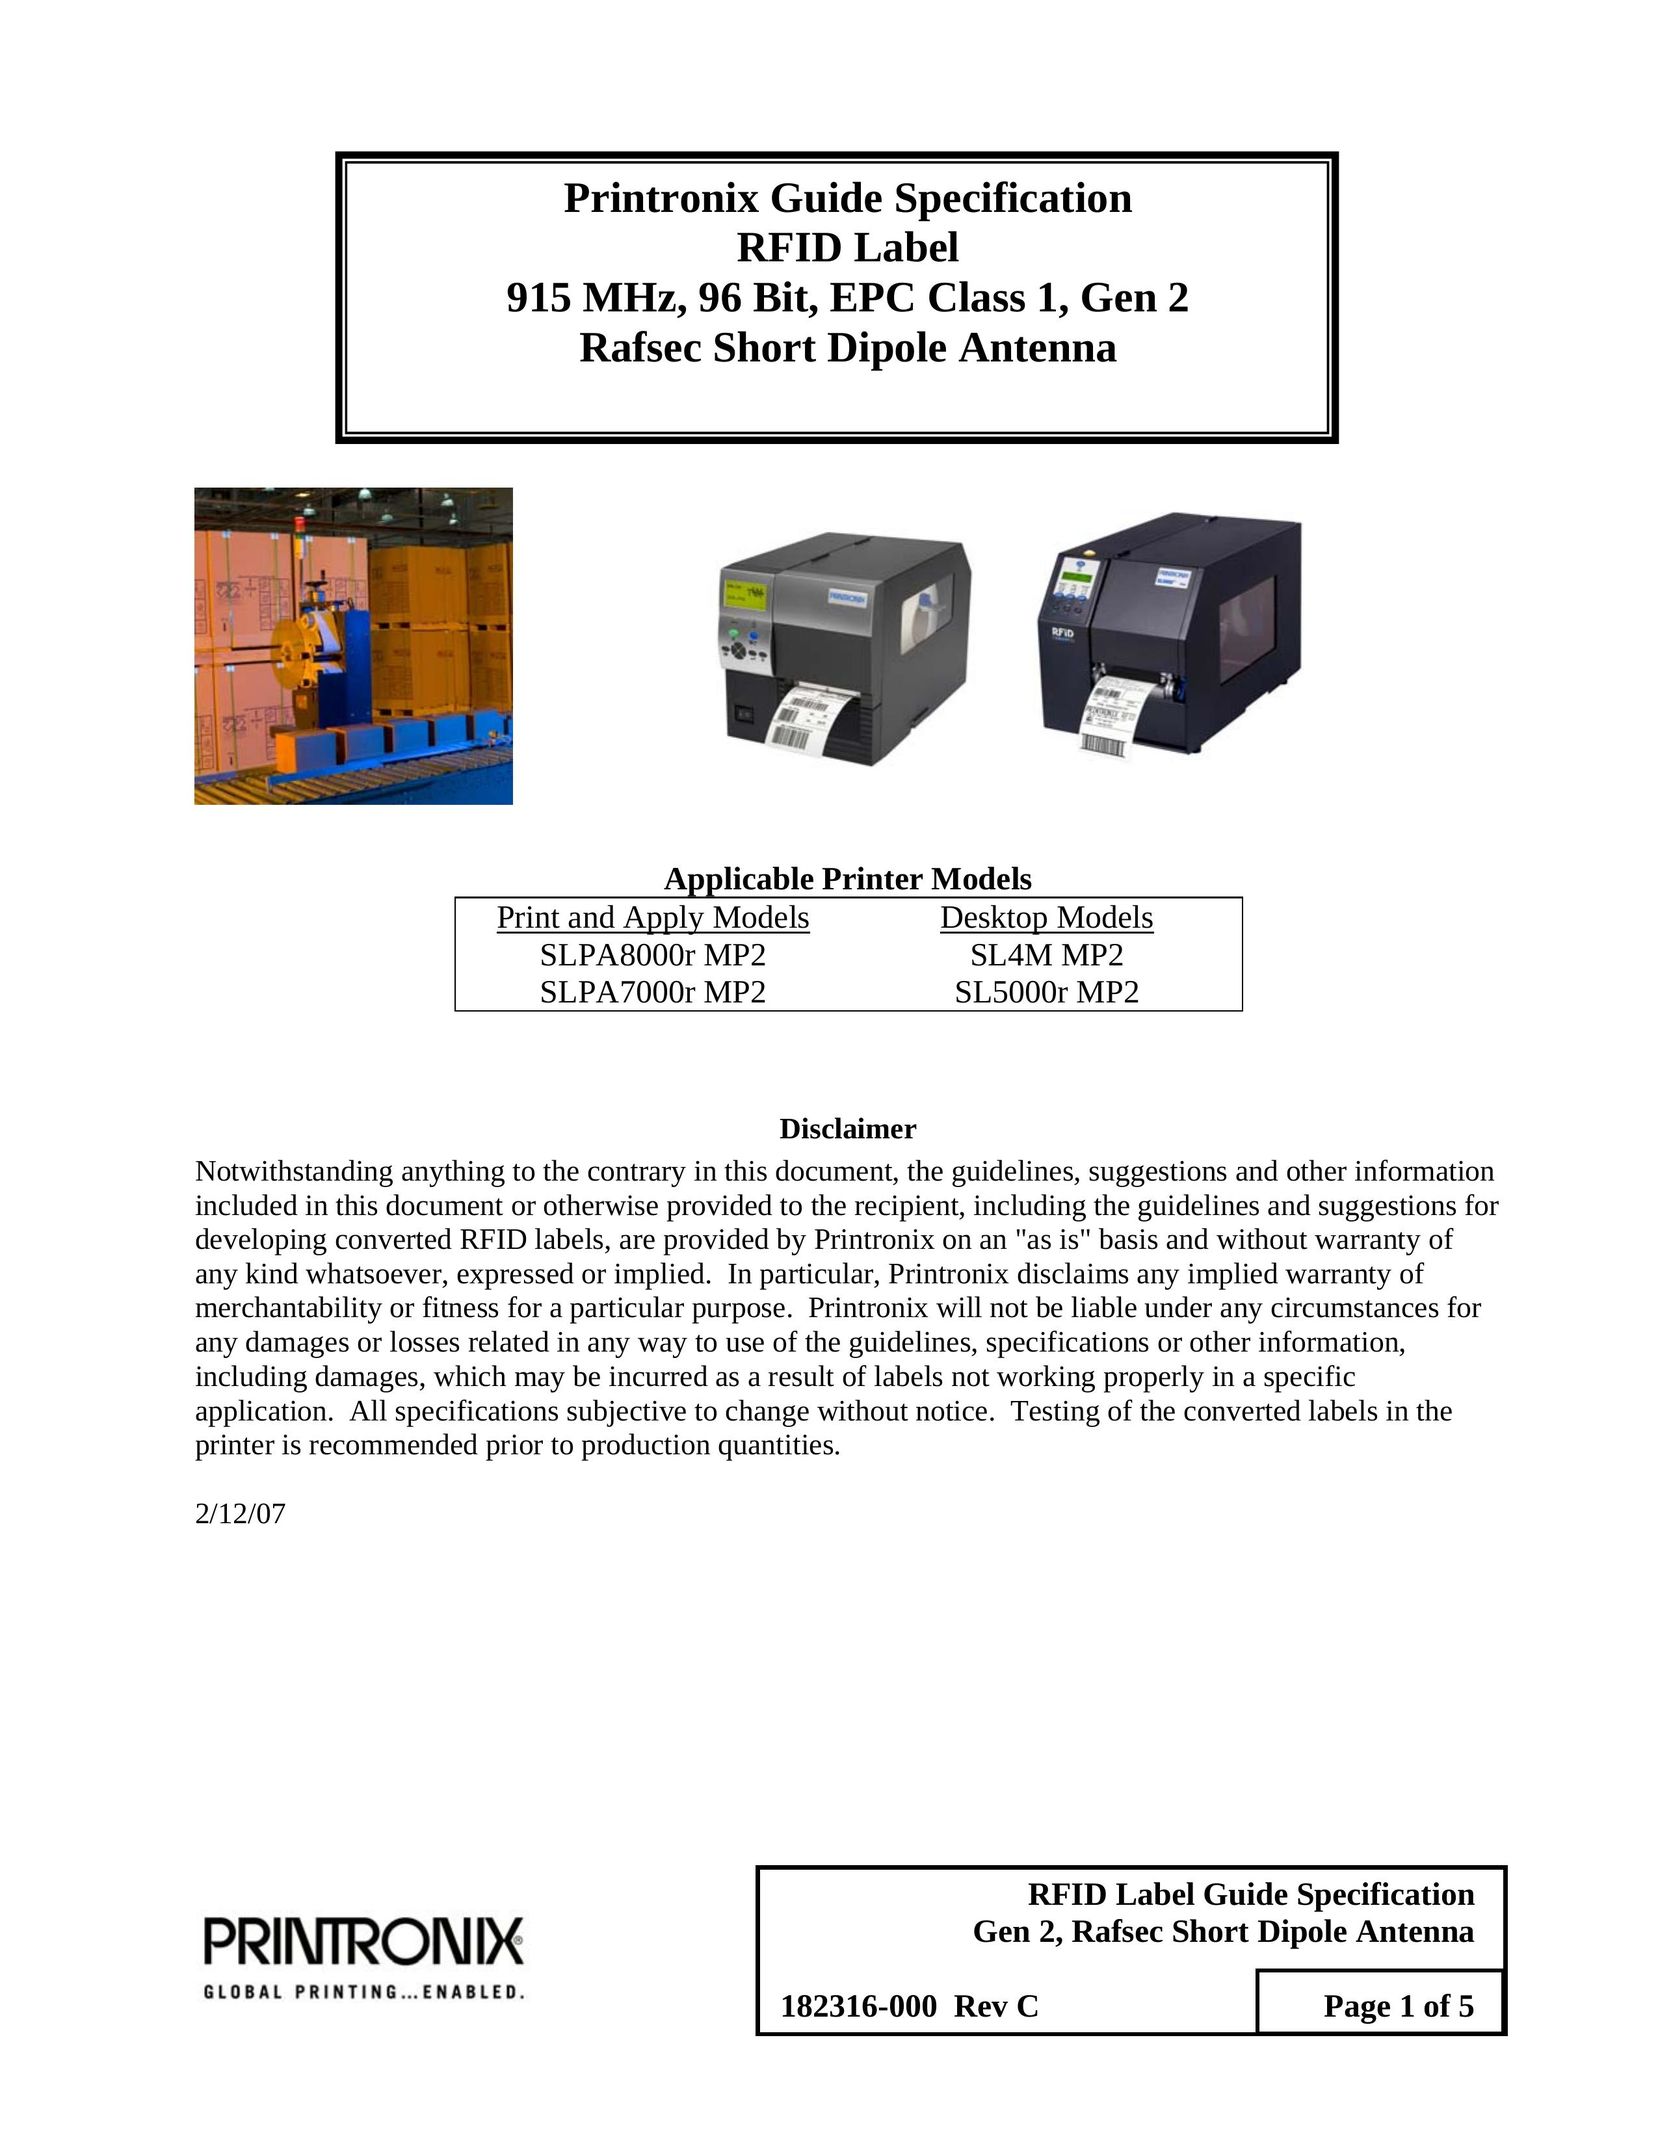 Printronix SL4M MP2 Printer User Manual